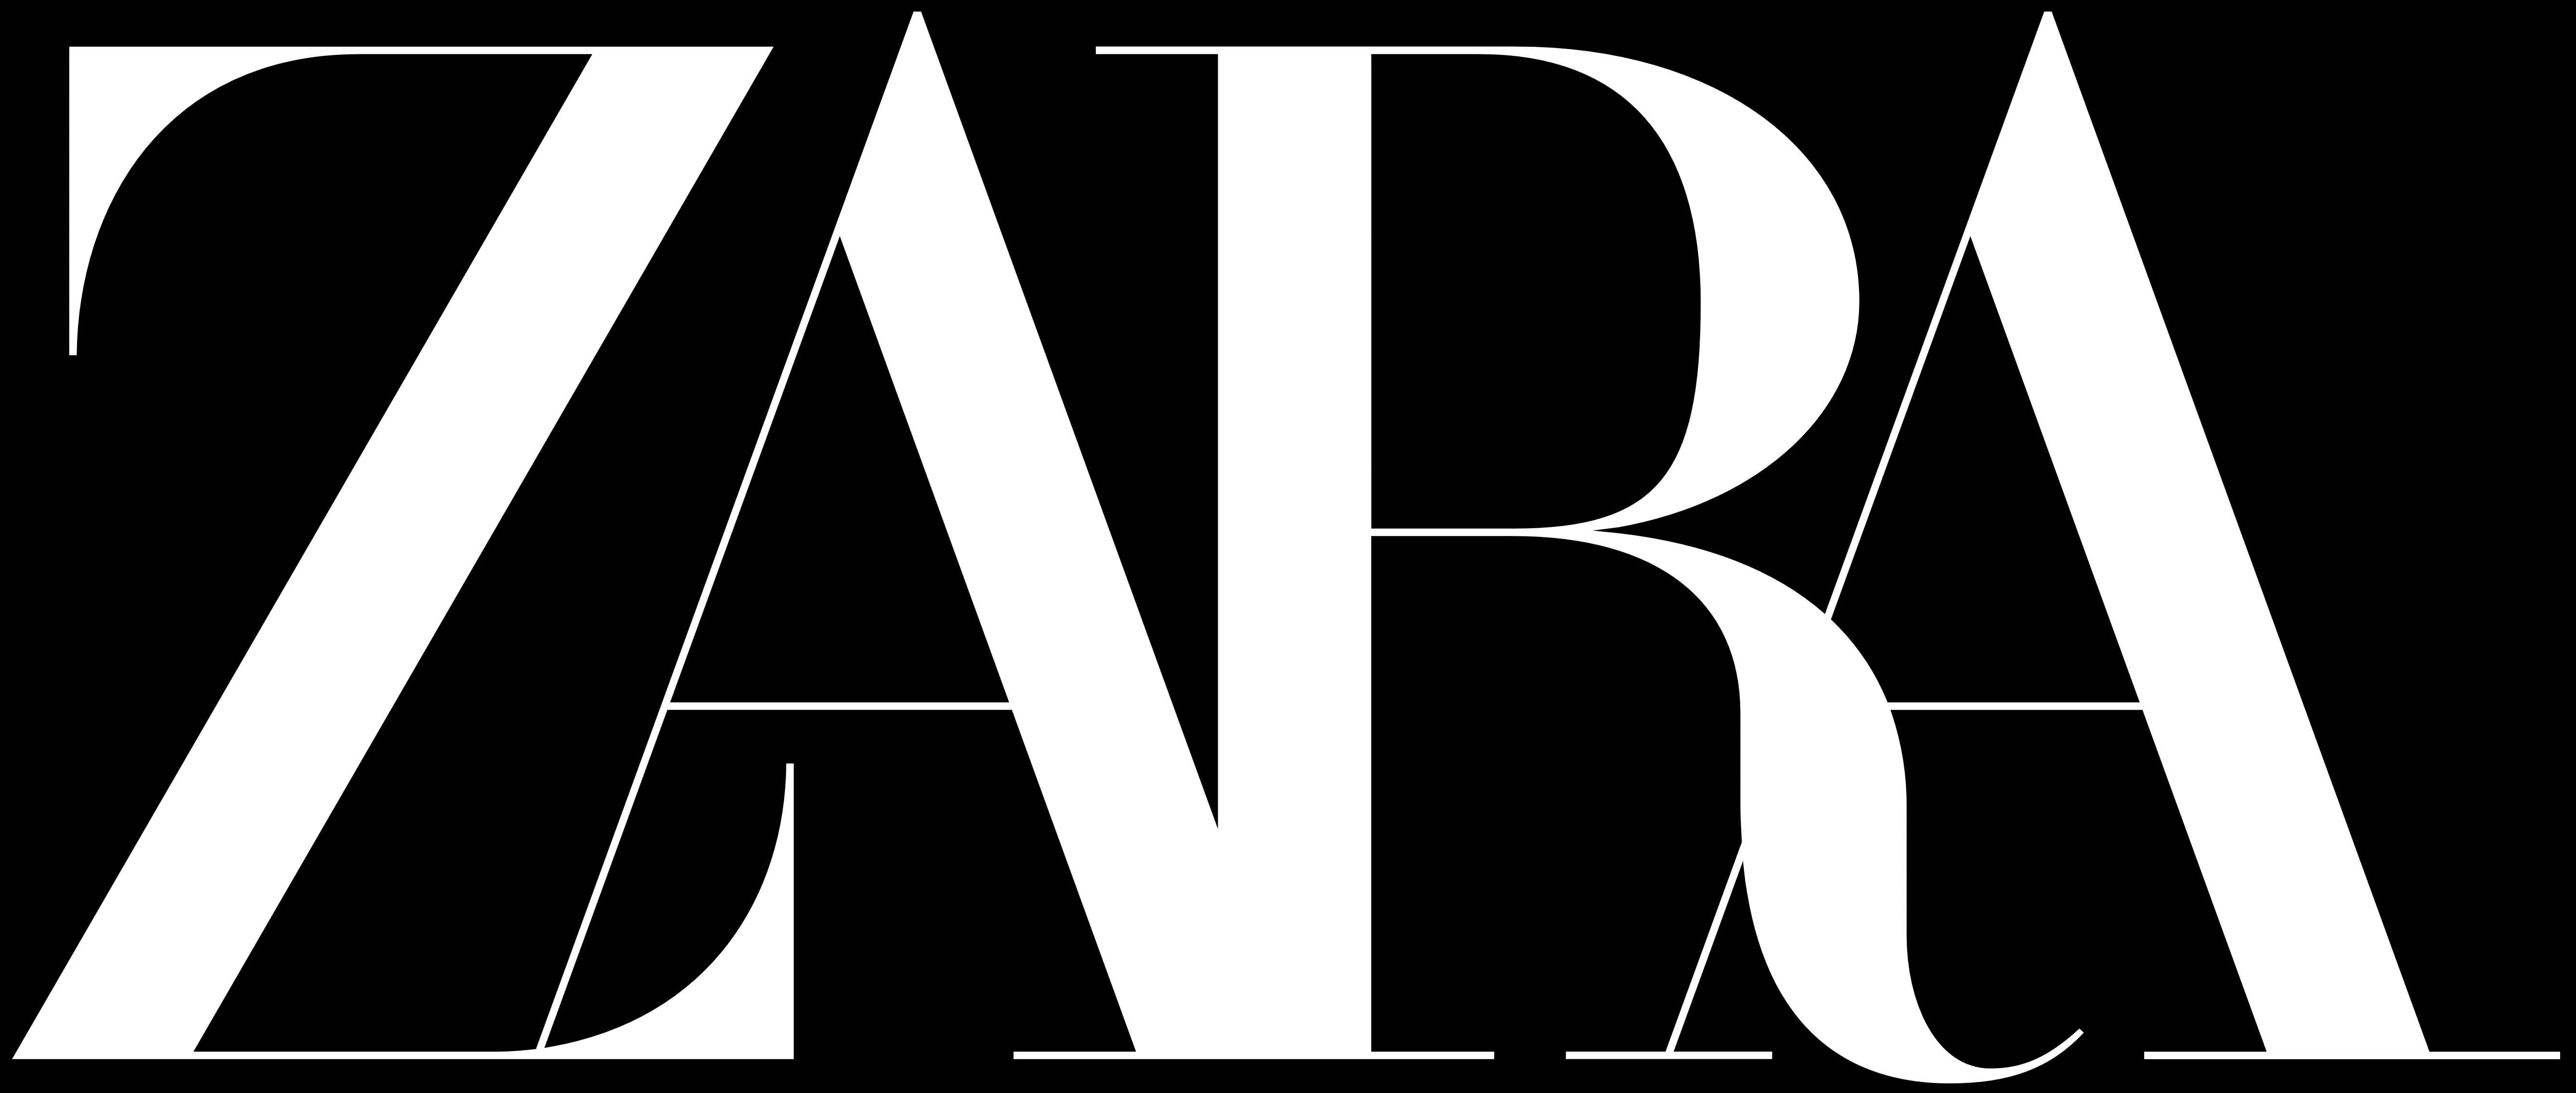  Zara logo  vector svg transparent png 